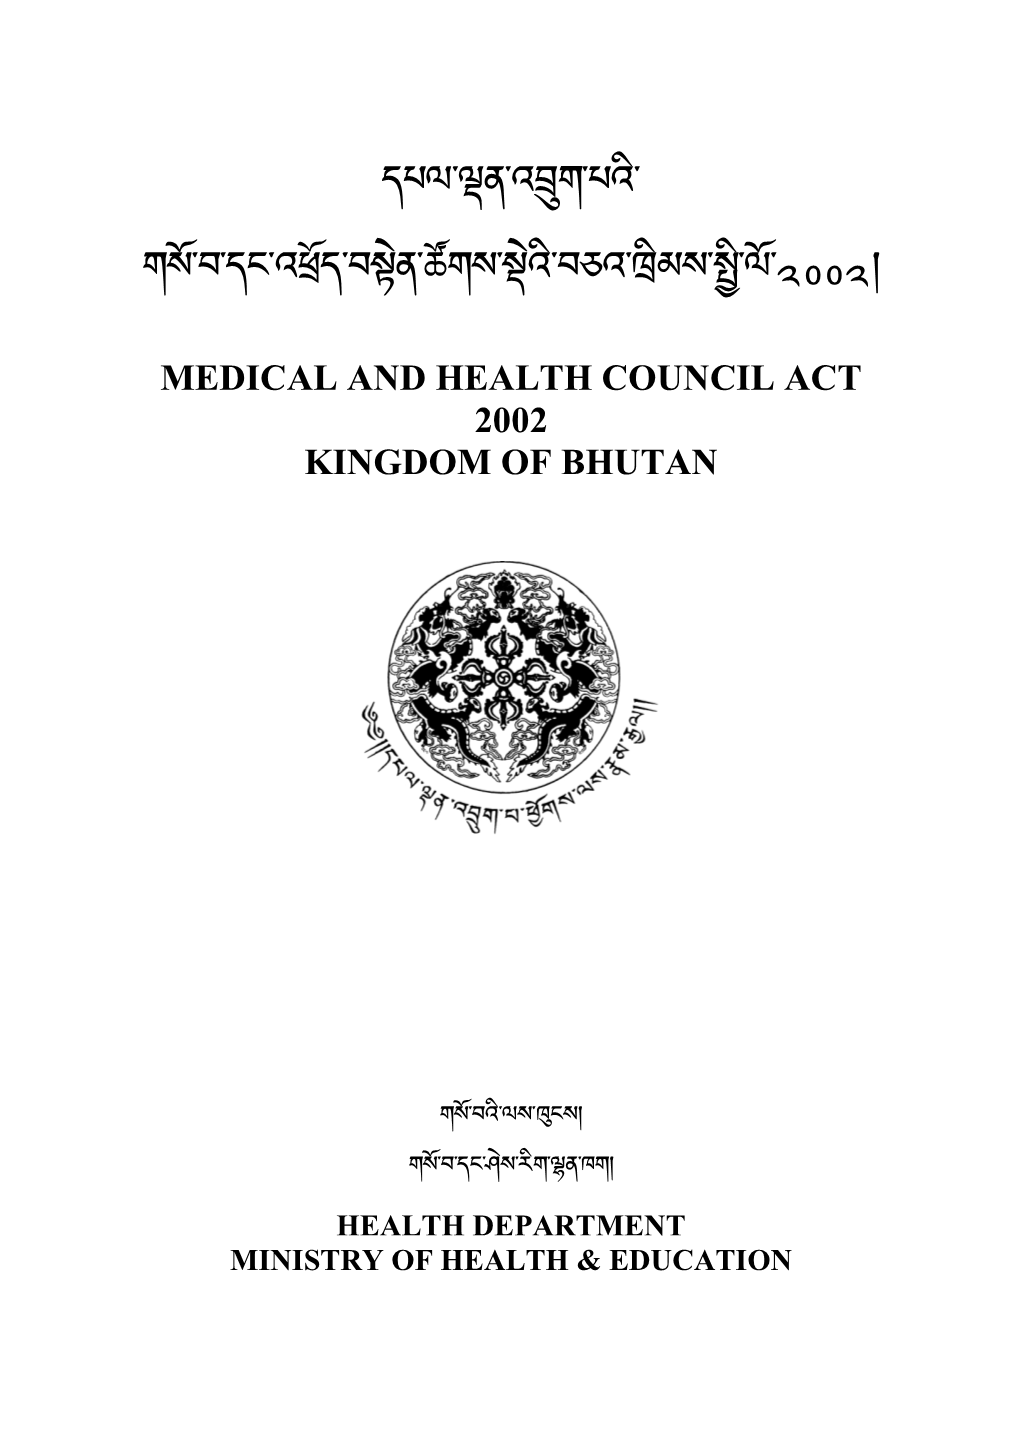 Medical and Health Council Act 2002 Kingdom of Bhutan